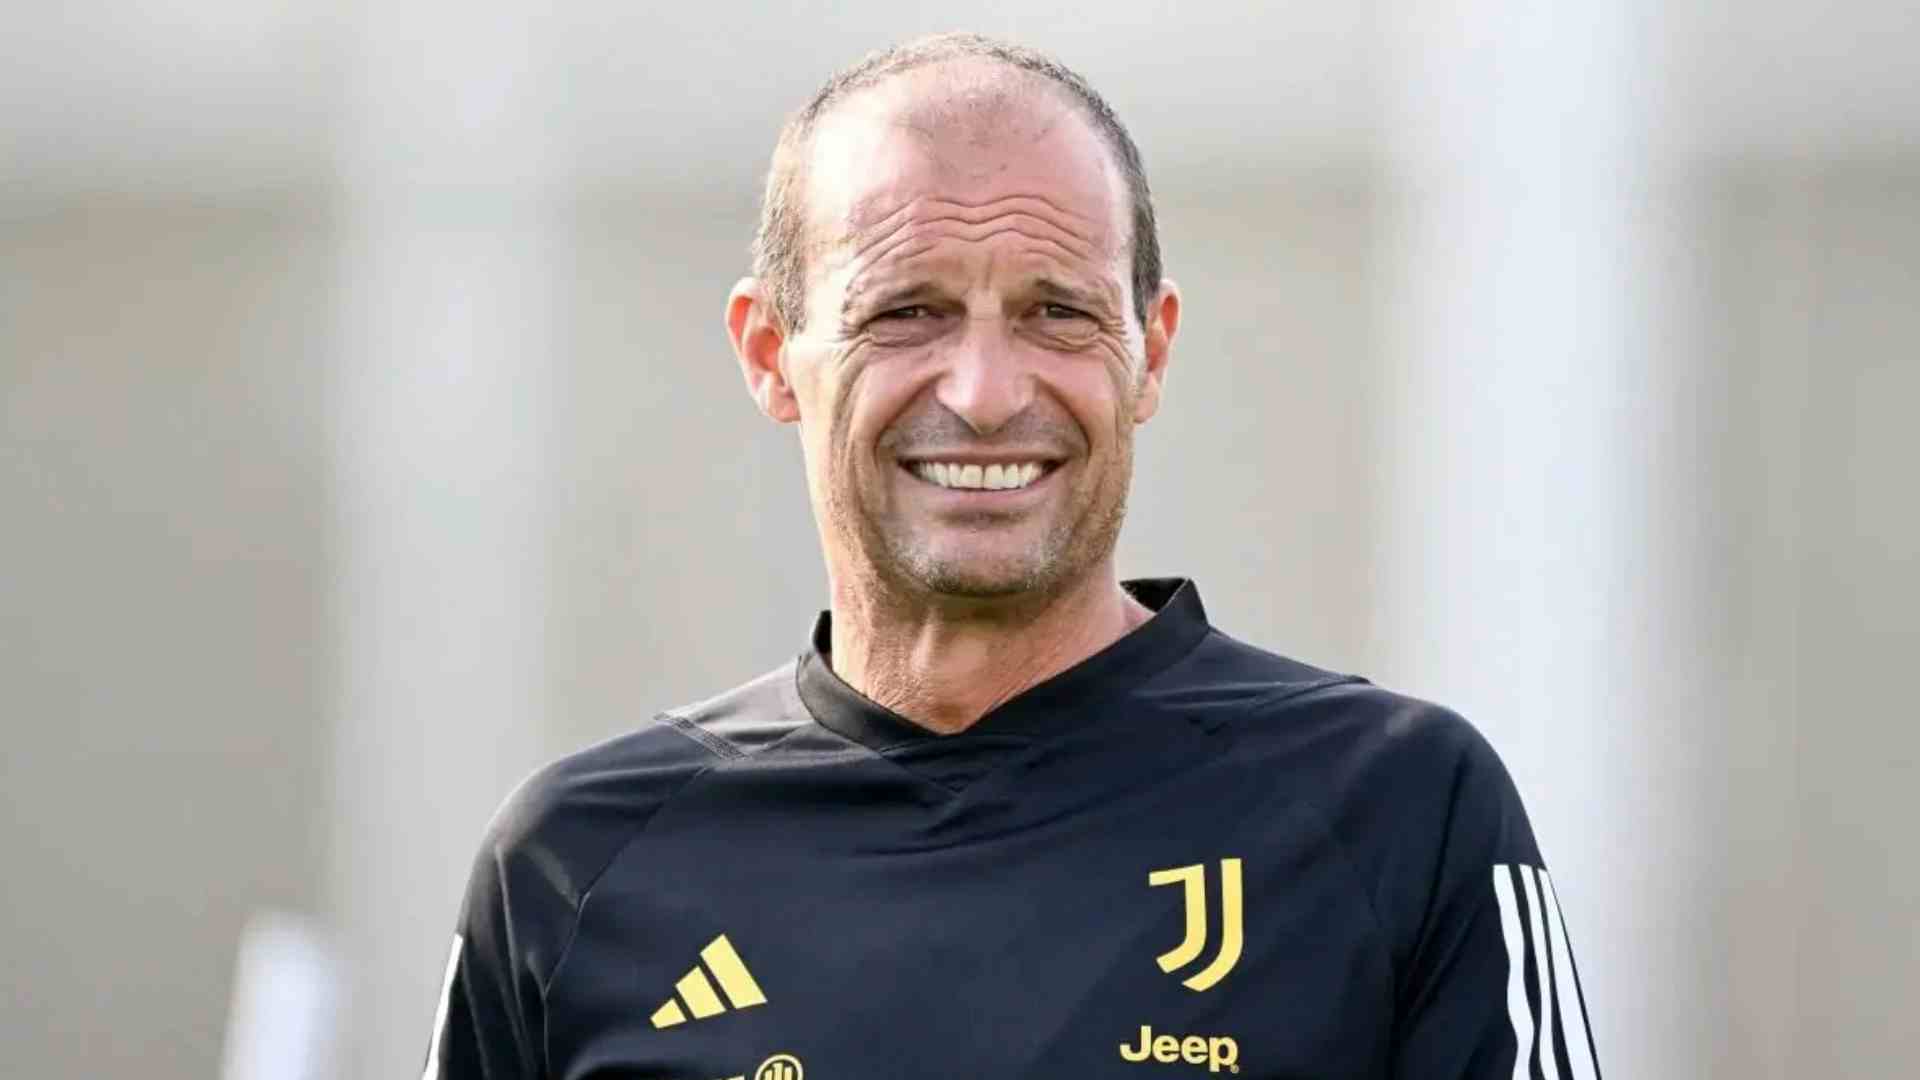 Ufficiale: la Juventus esonera Allegri! Al suo posto Montero ad interim